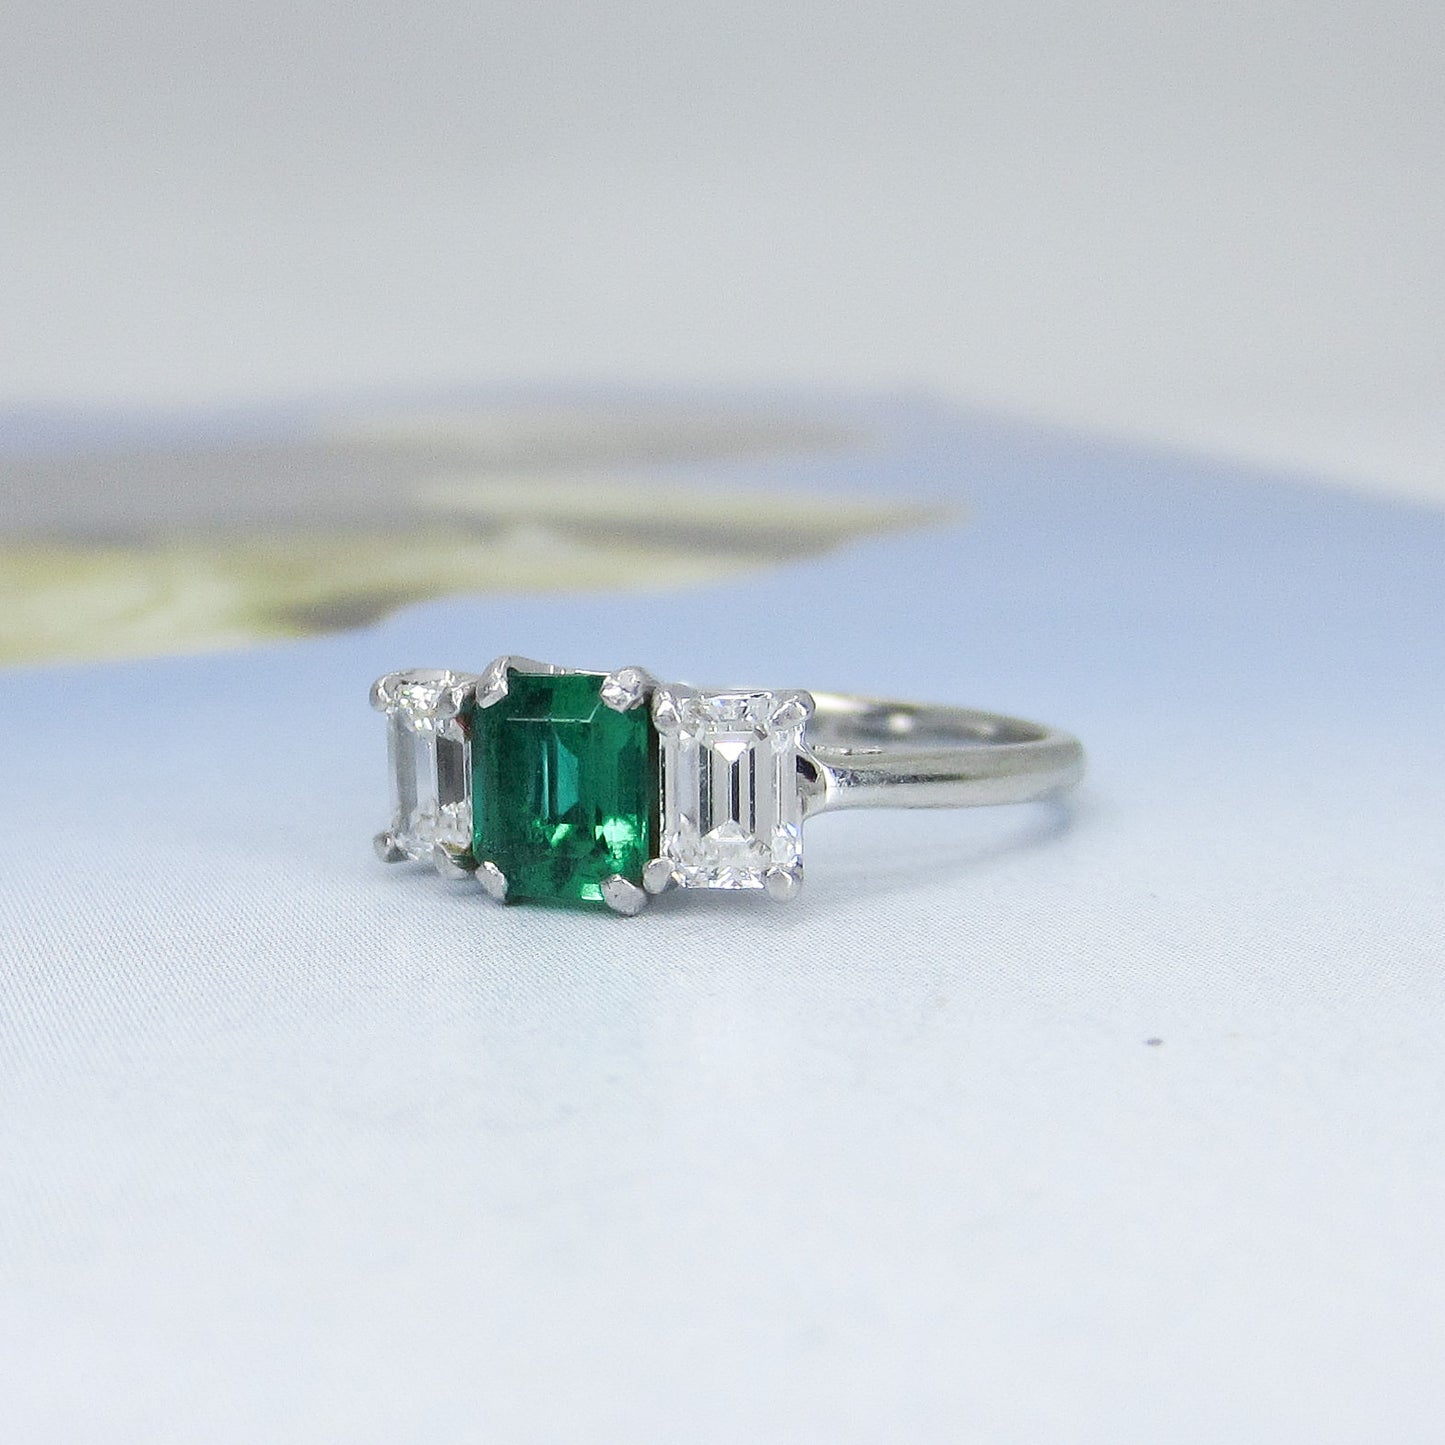 SOLD Vintage Mid-Century Emerald and Diamond Ring 18k/Plat c. 1950